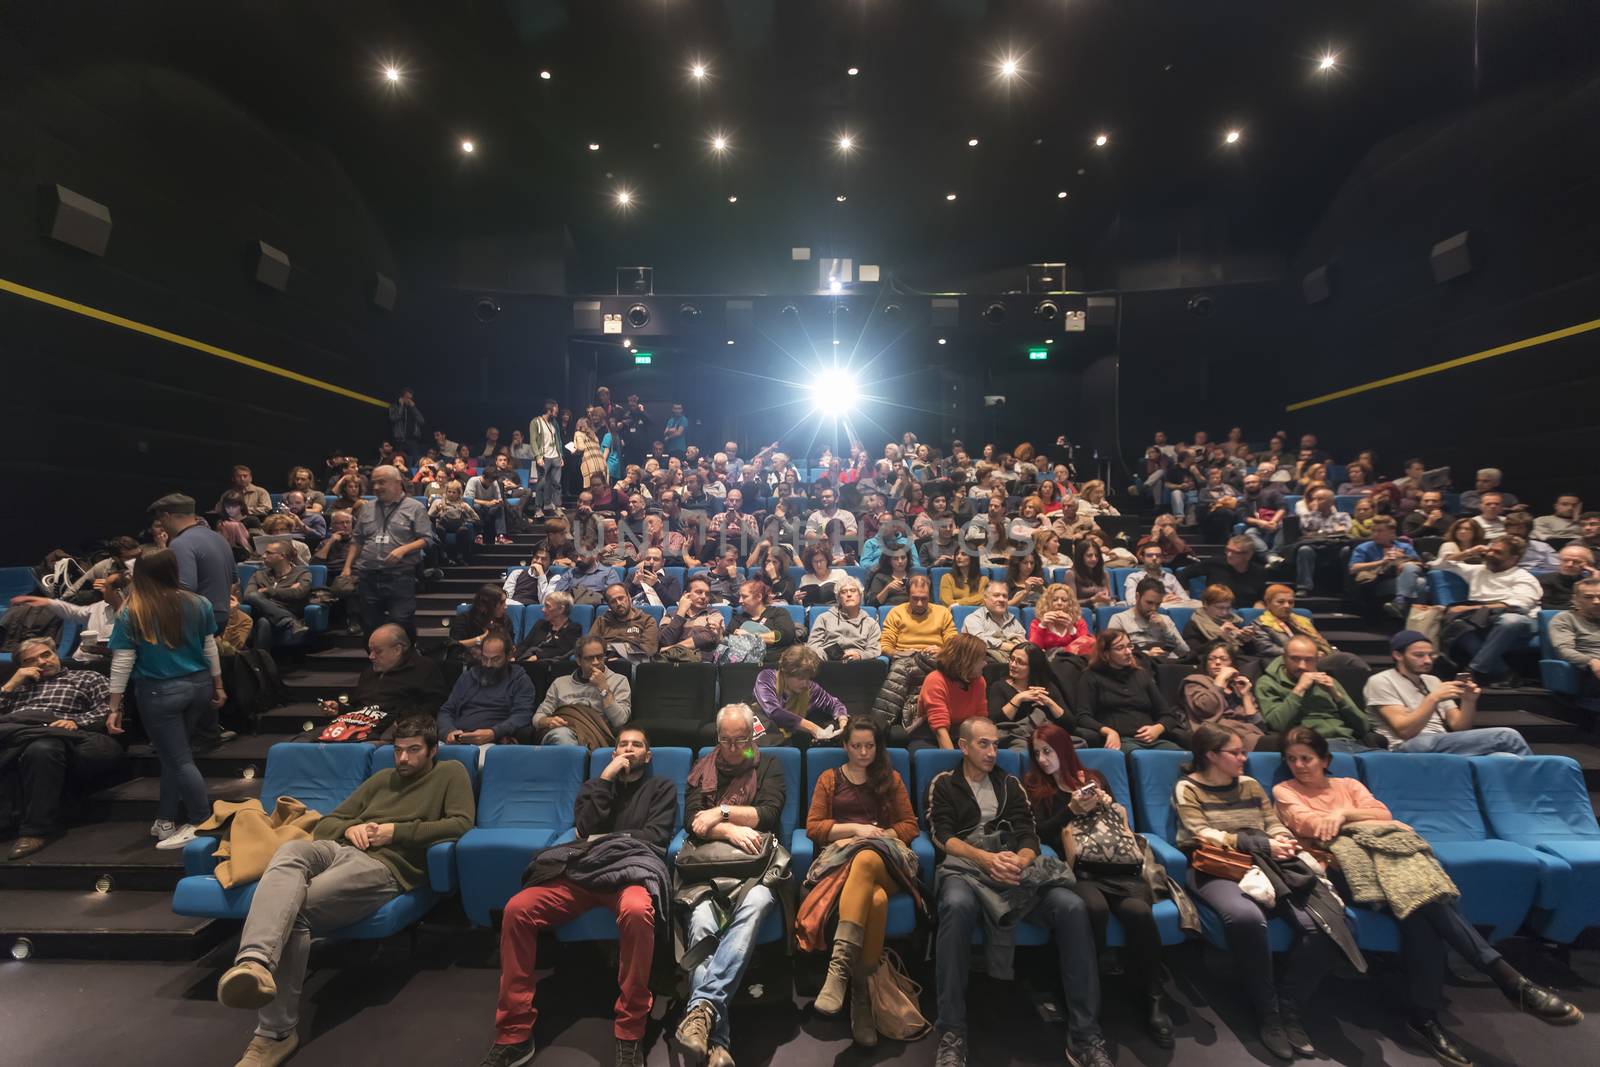 Thessaloniki, Greece - November 6, 2017: Spectators watching in the cinema during the 58th international Thessaloniki Film Festival at Jonh Cassavetes Cinema